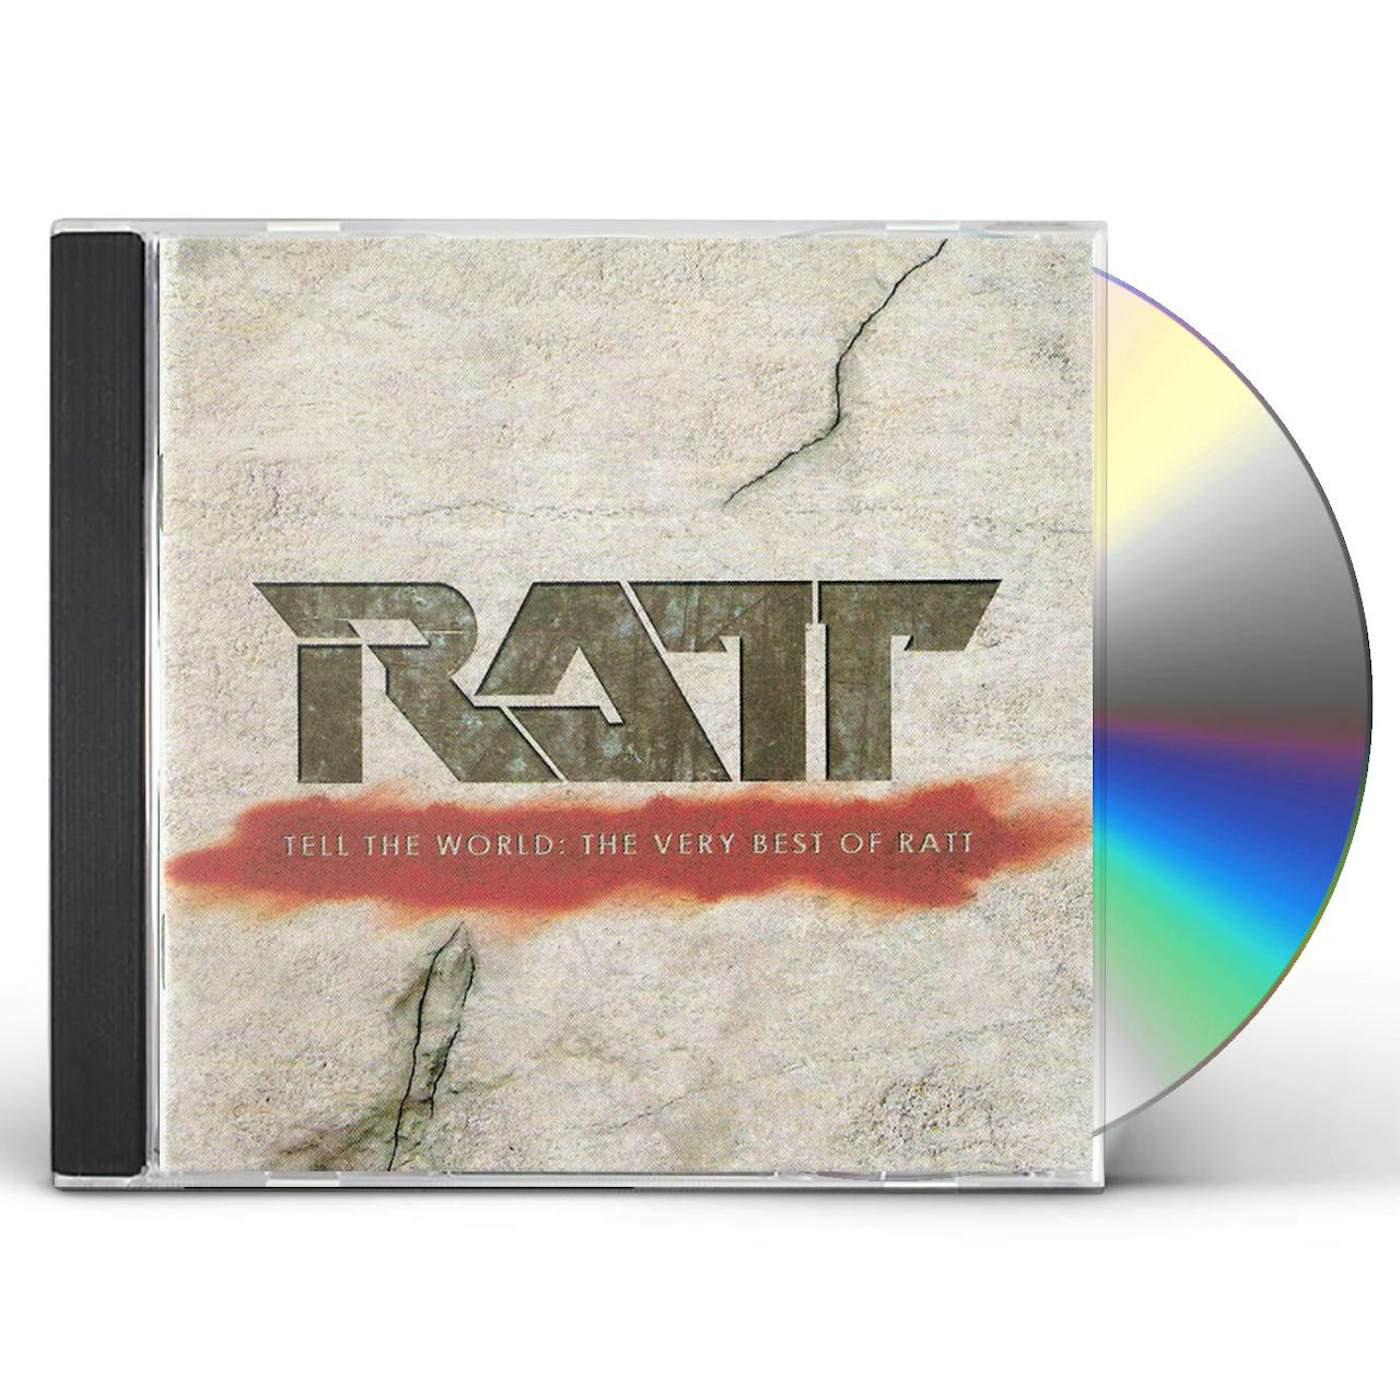 TELL THE WORLD: THE VERY BEST OF RATT CD